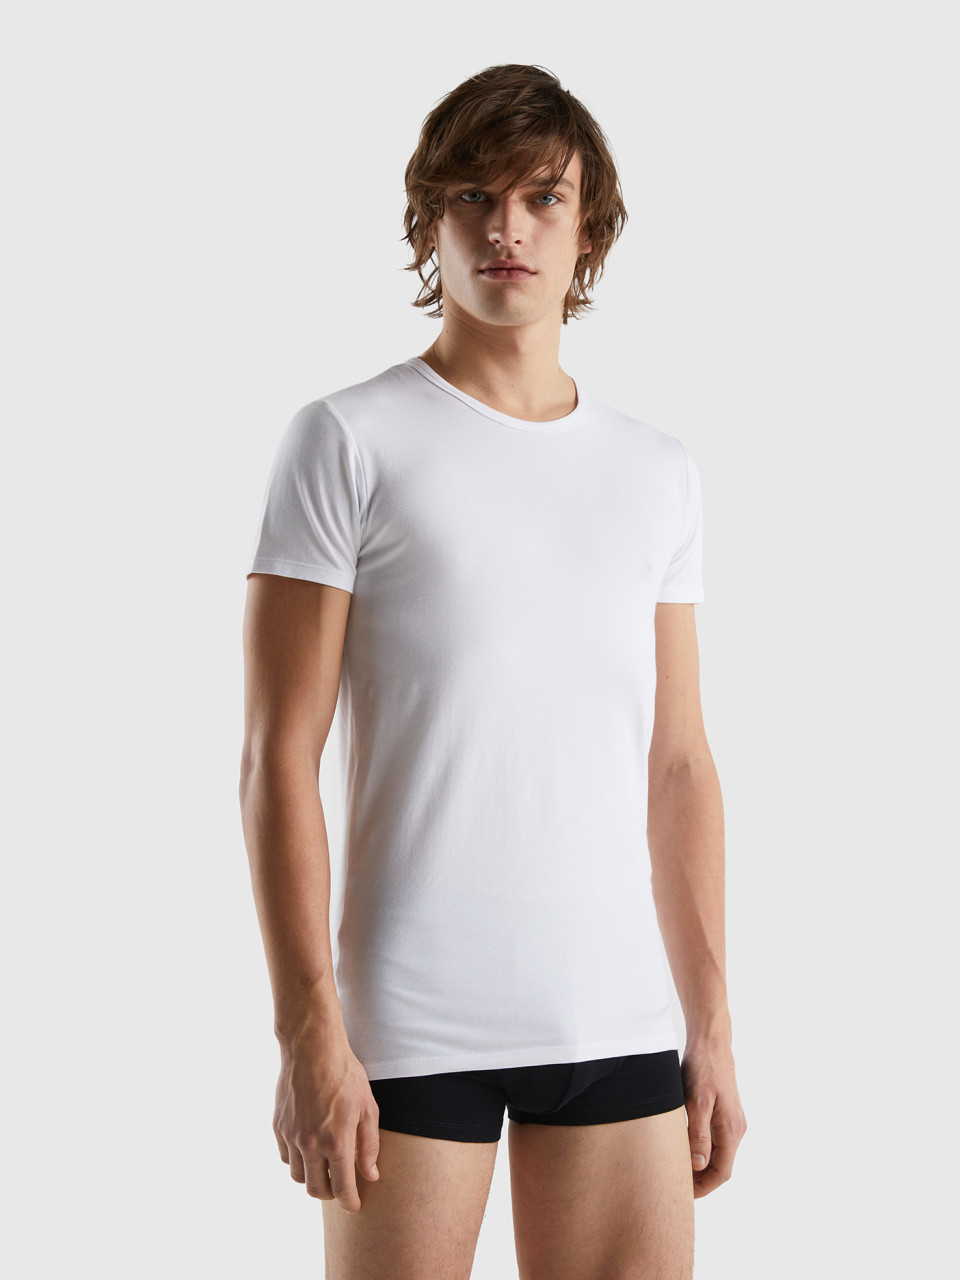 Benetton, Organic Stretch Cotton T-shirt, White, Men